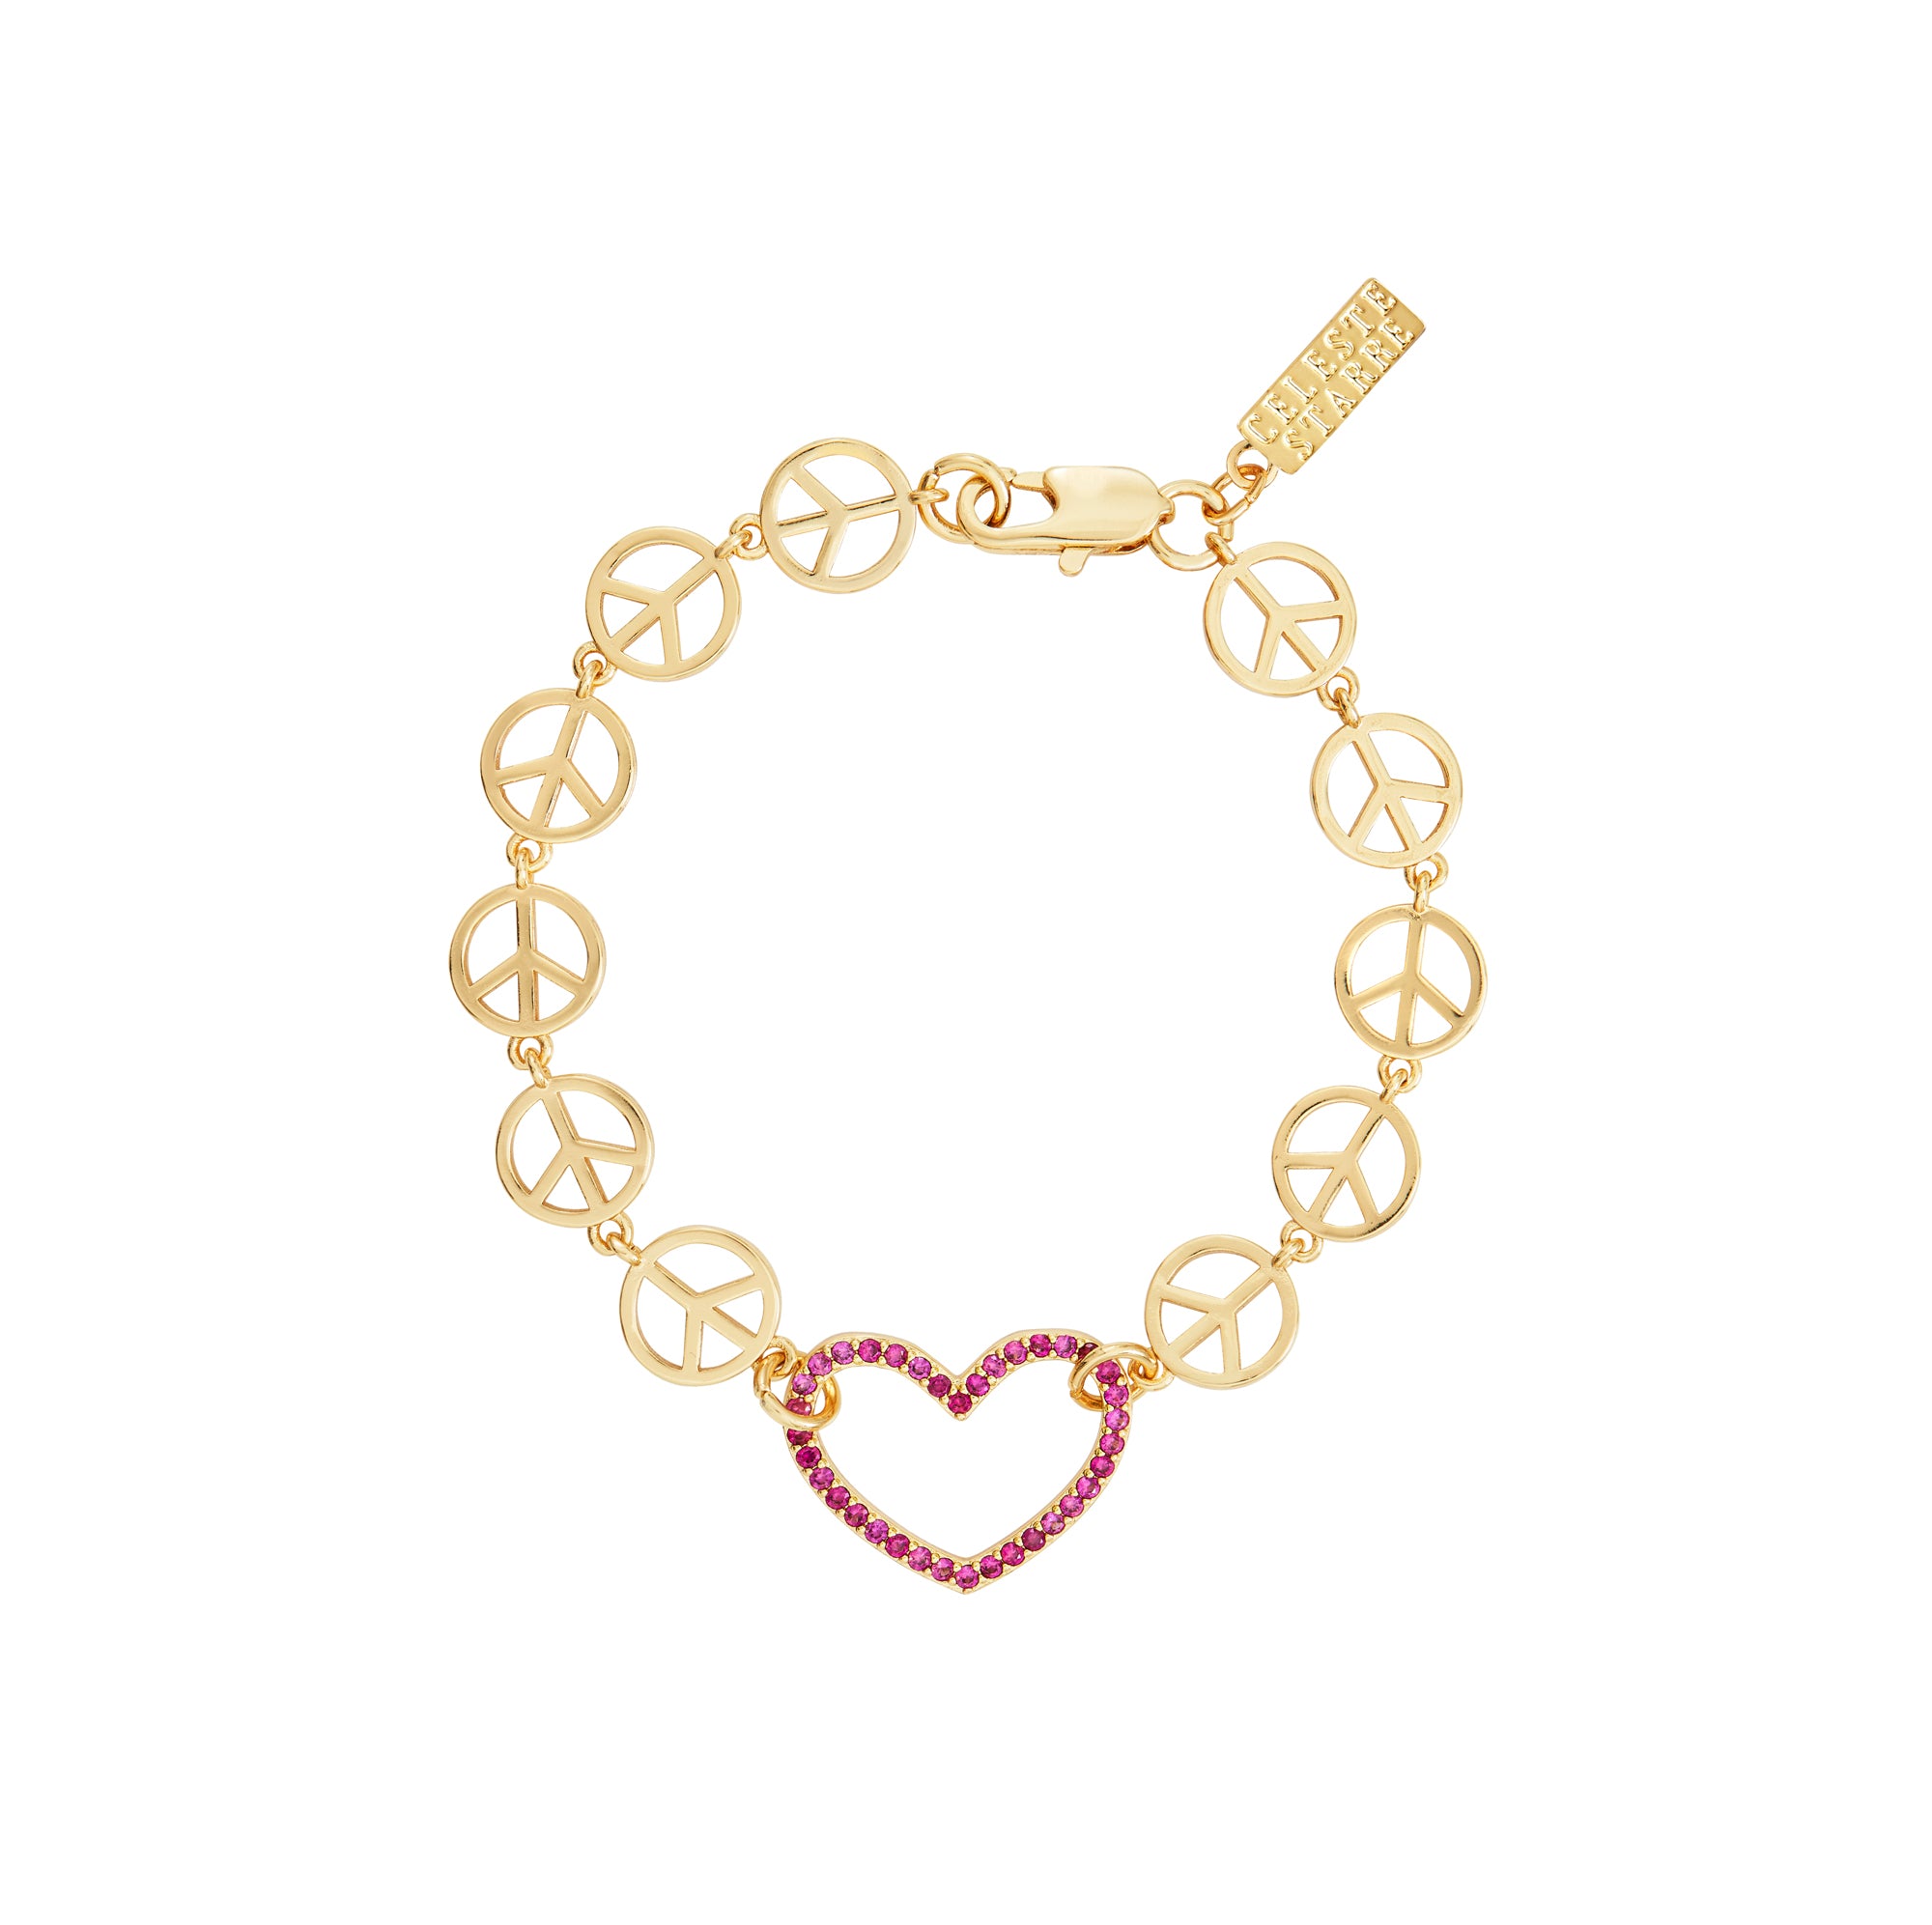 Buy/Send Love and Peace Bracelet Online- FNP